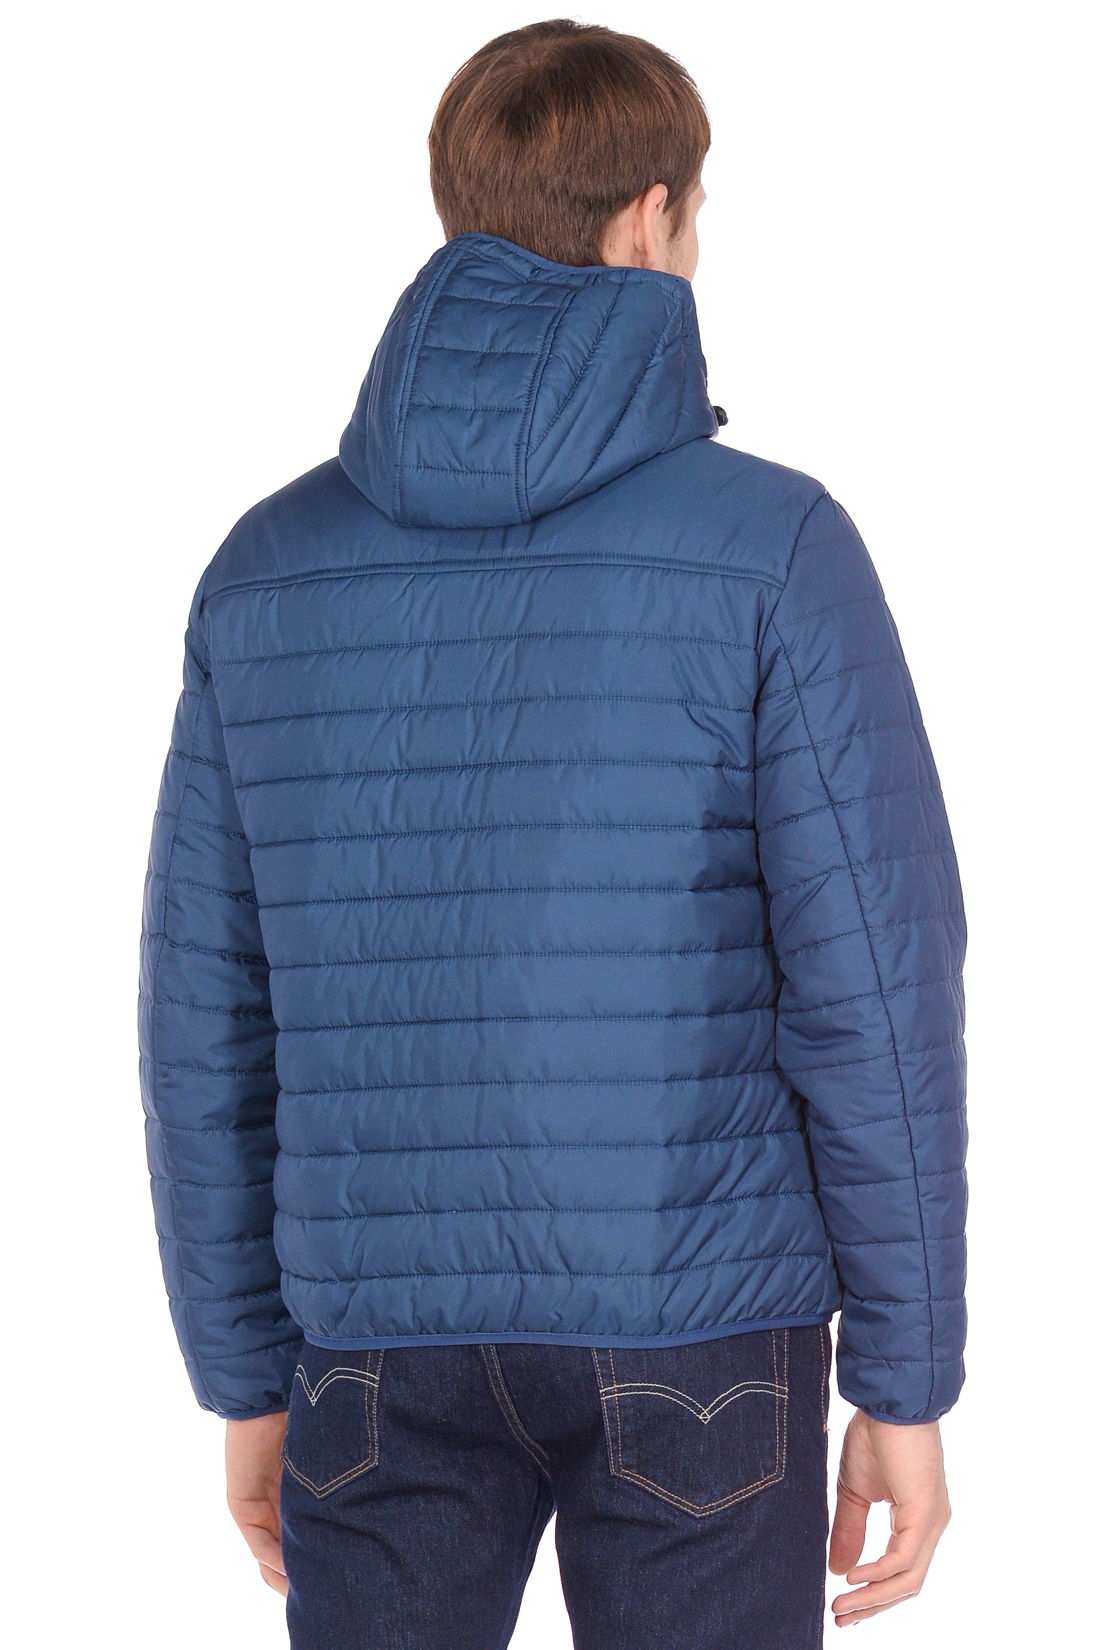 Куртка с двумя линиями карманов (арт. baon B539007), размер 3XL, цвет синий Куртка с двумя линиями карманов (арт. baon B539007) - фото 5